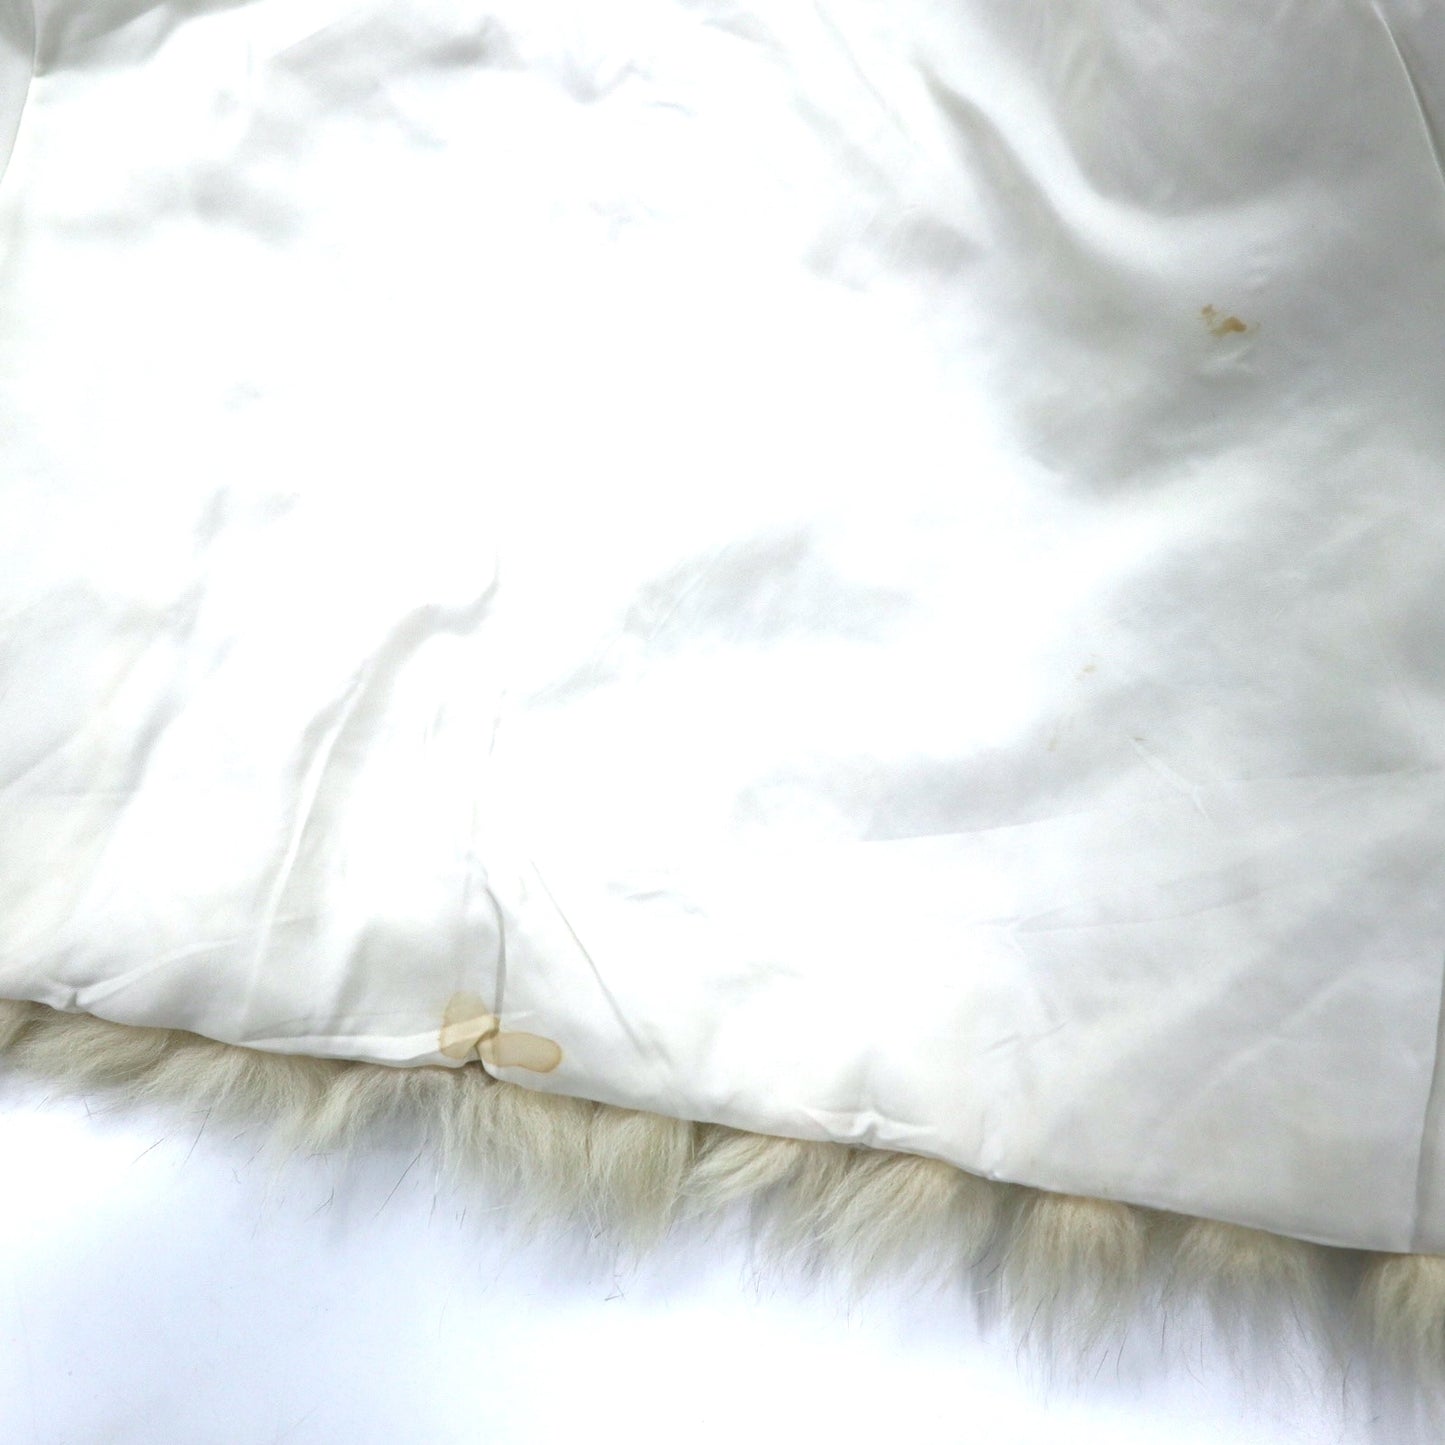 SAGA FOX フィンランド製 ブルーフォックス ファージャケット M ホワイト 毛皮